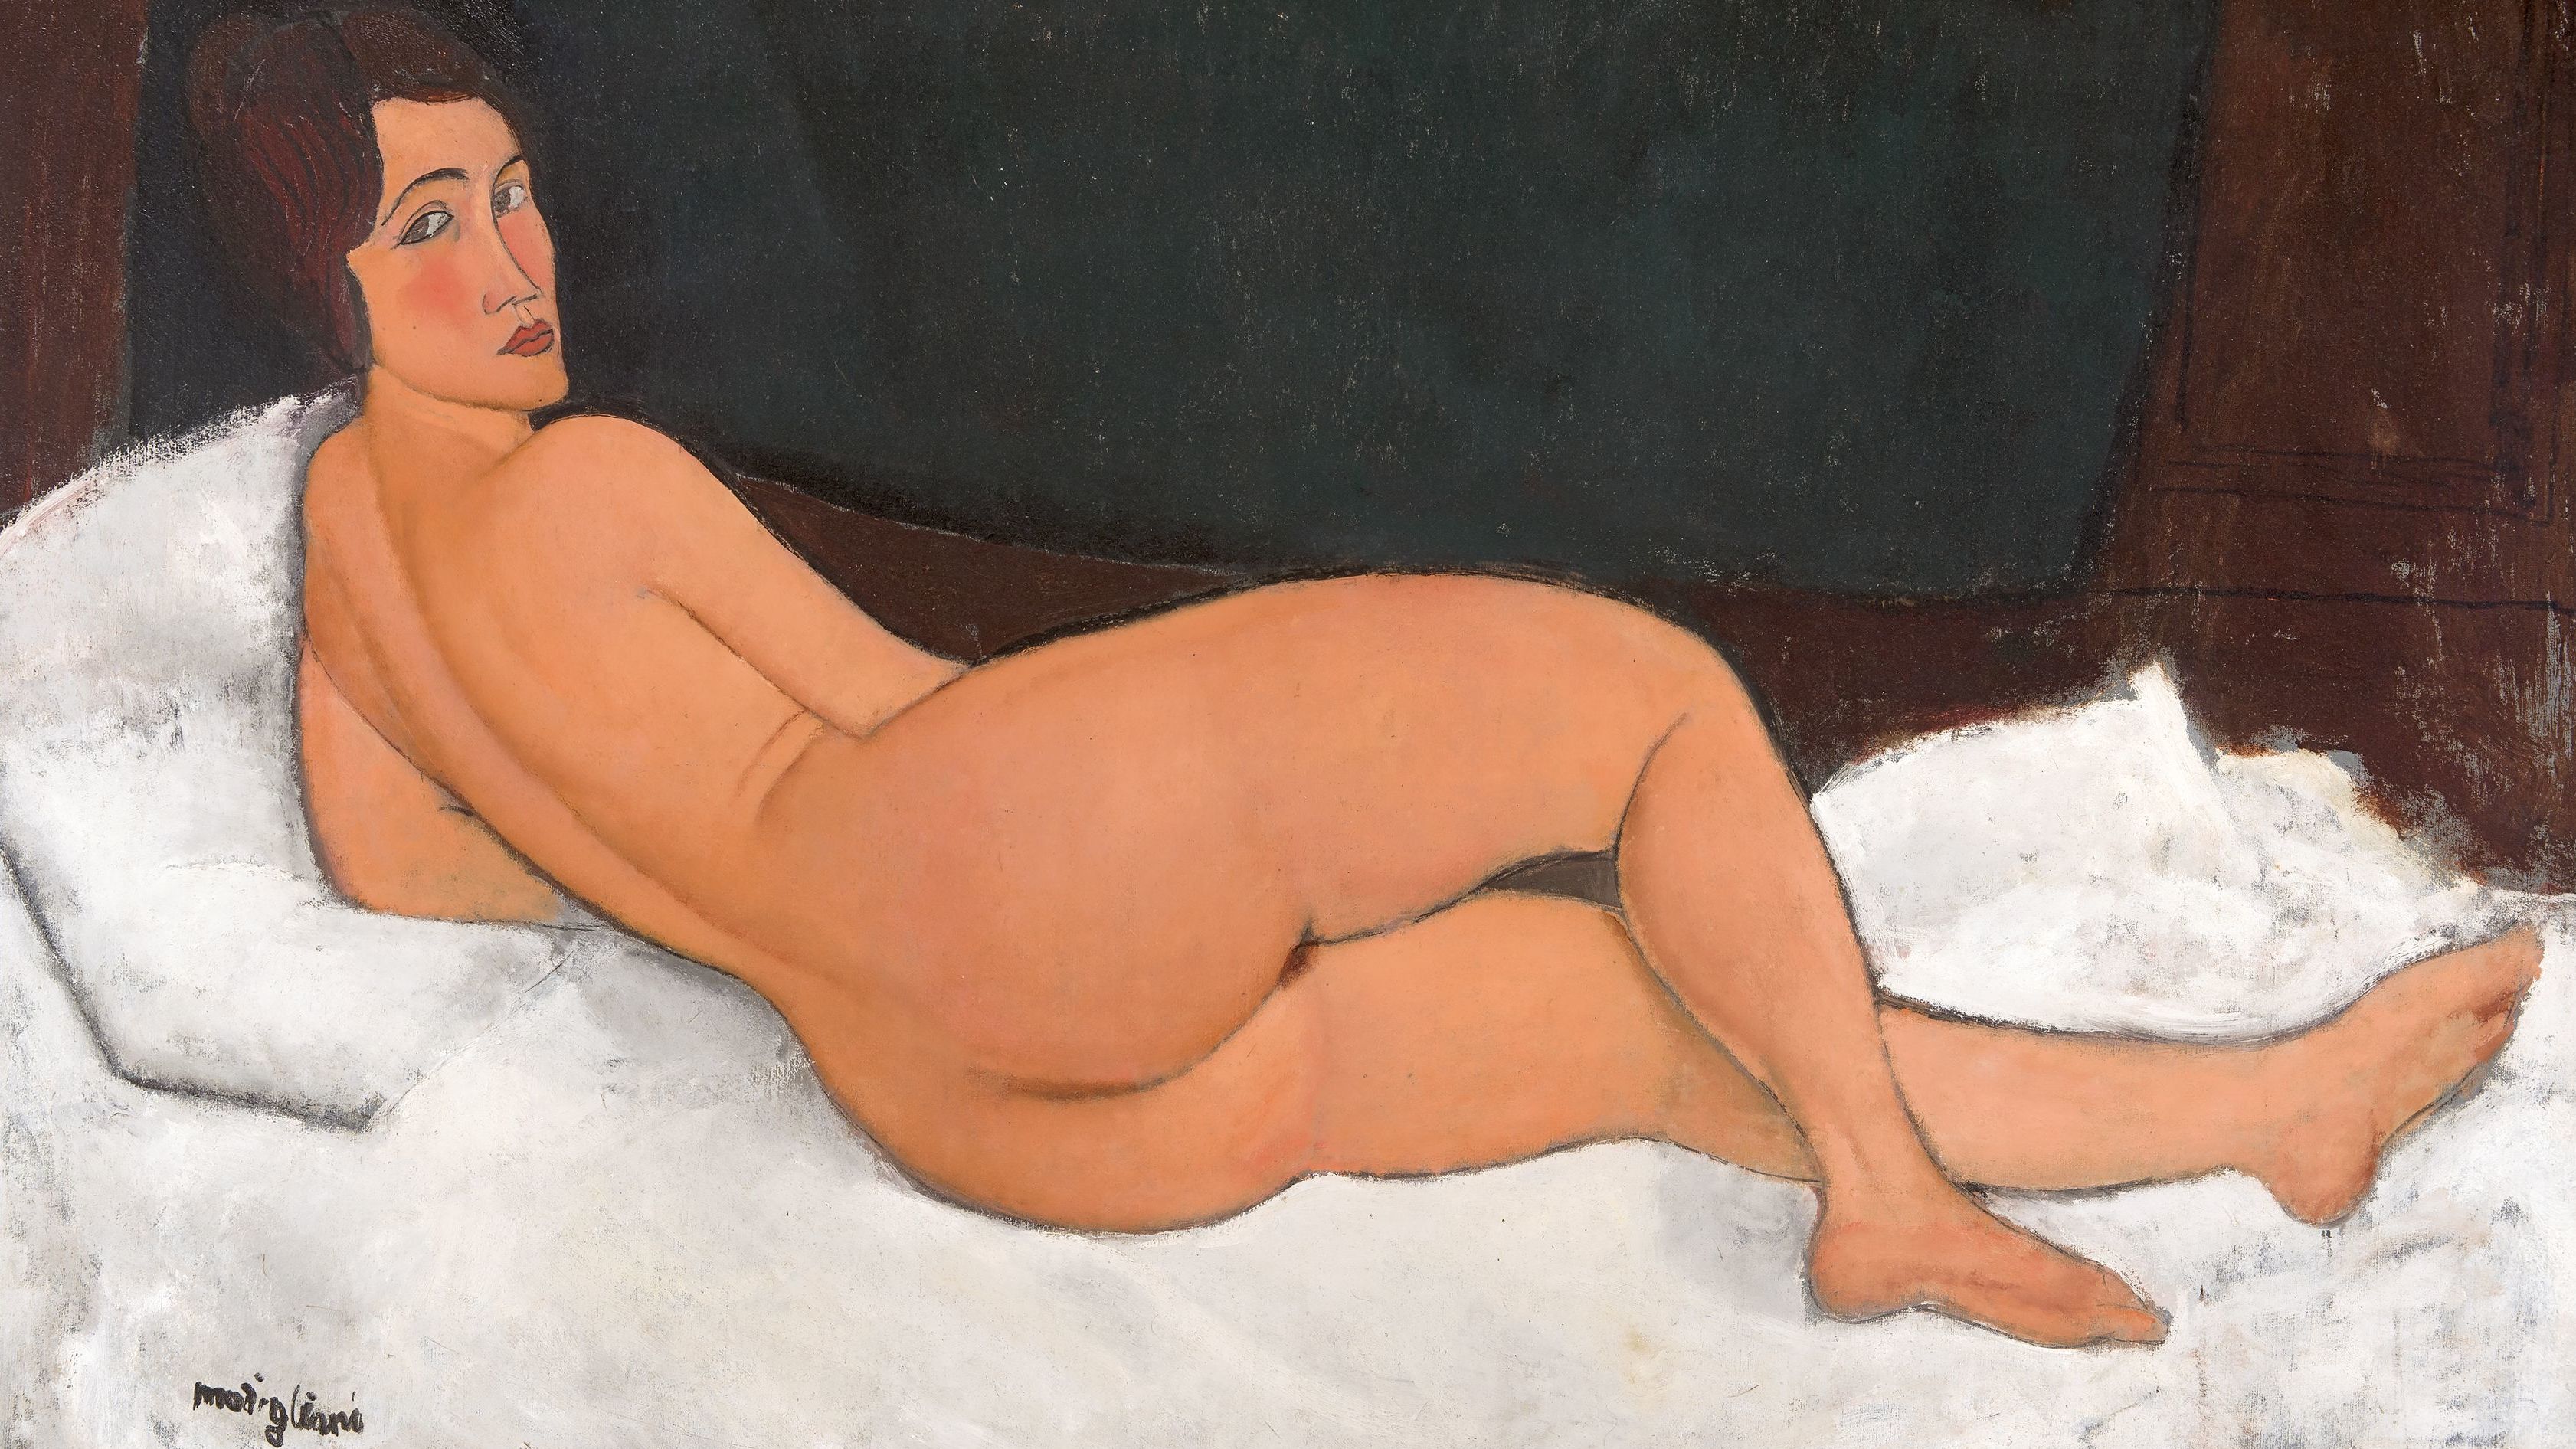 World Nudism - Nude art and censorship laid bare | CNN